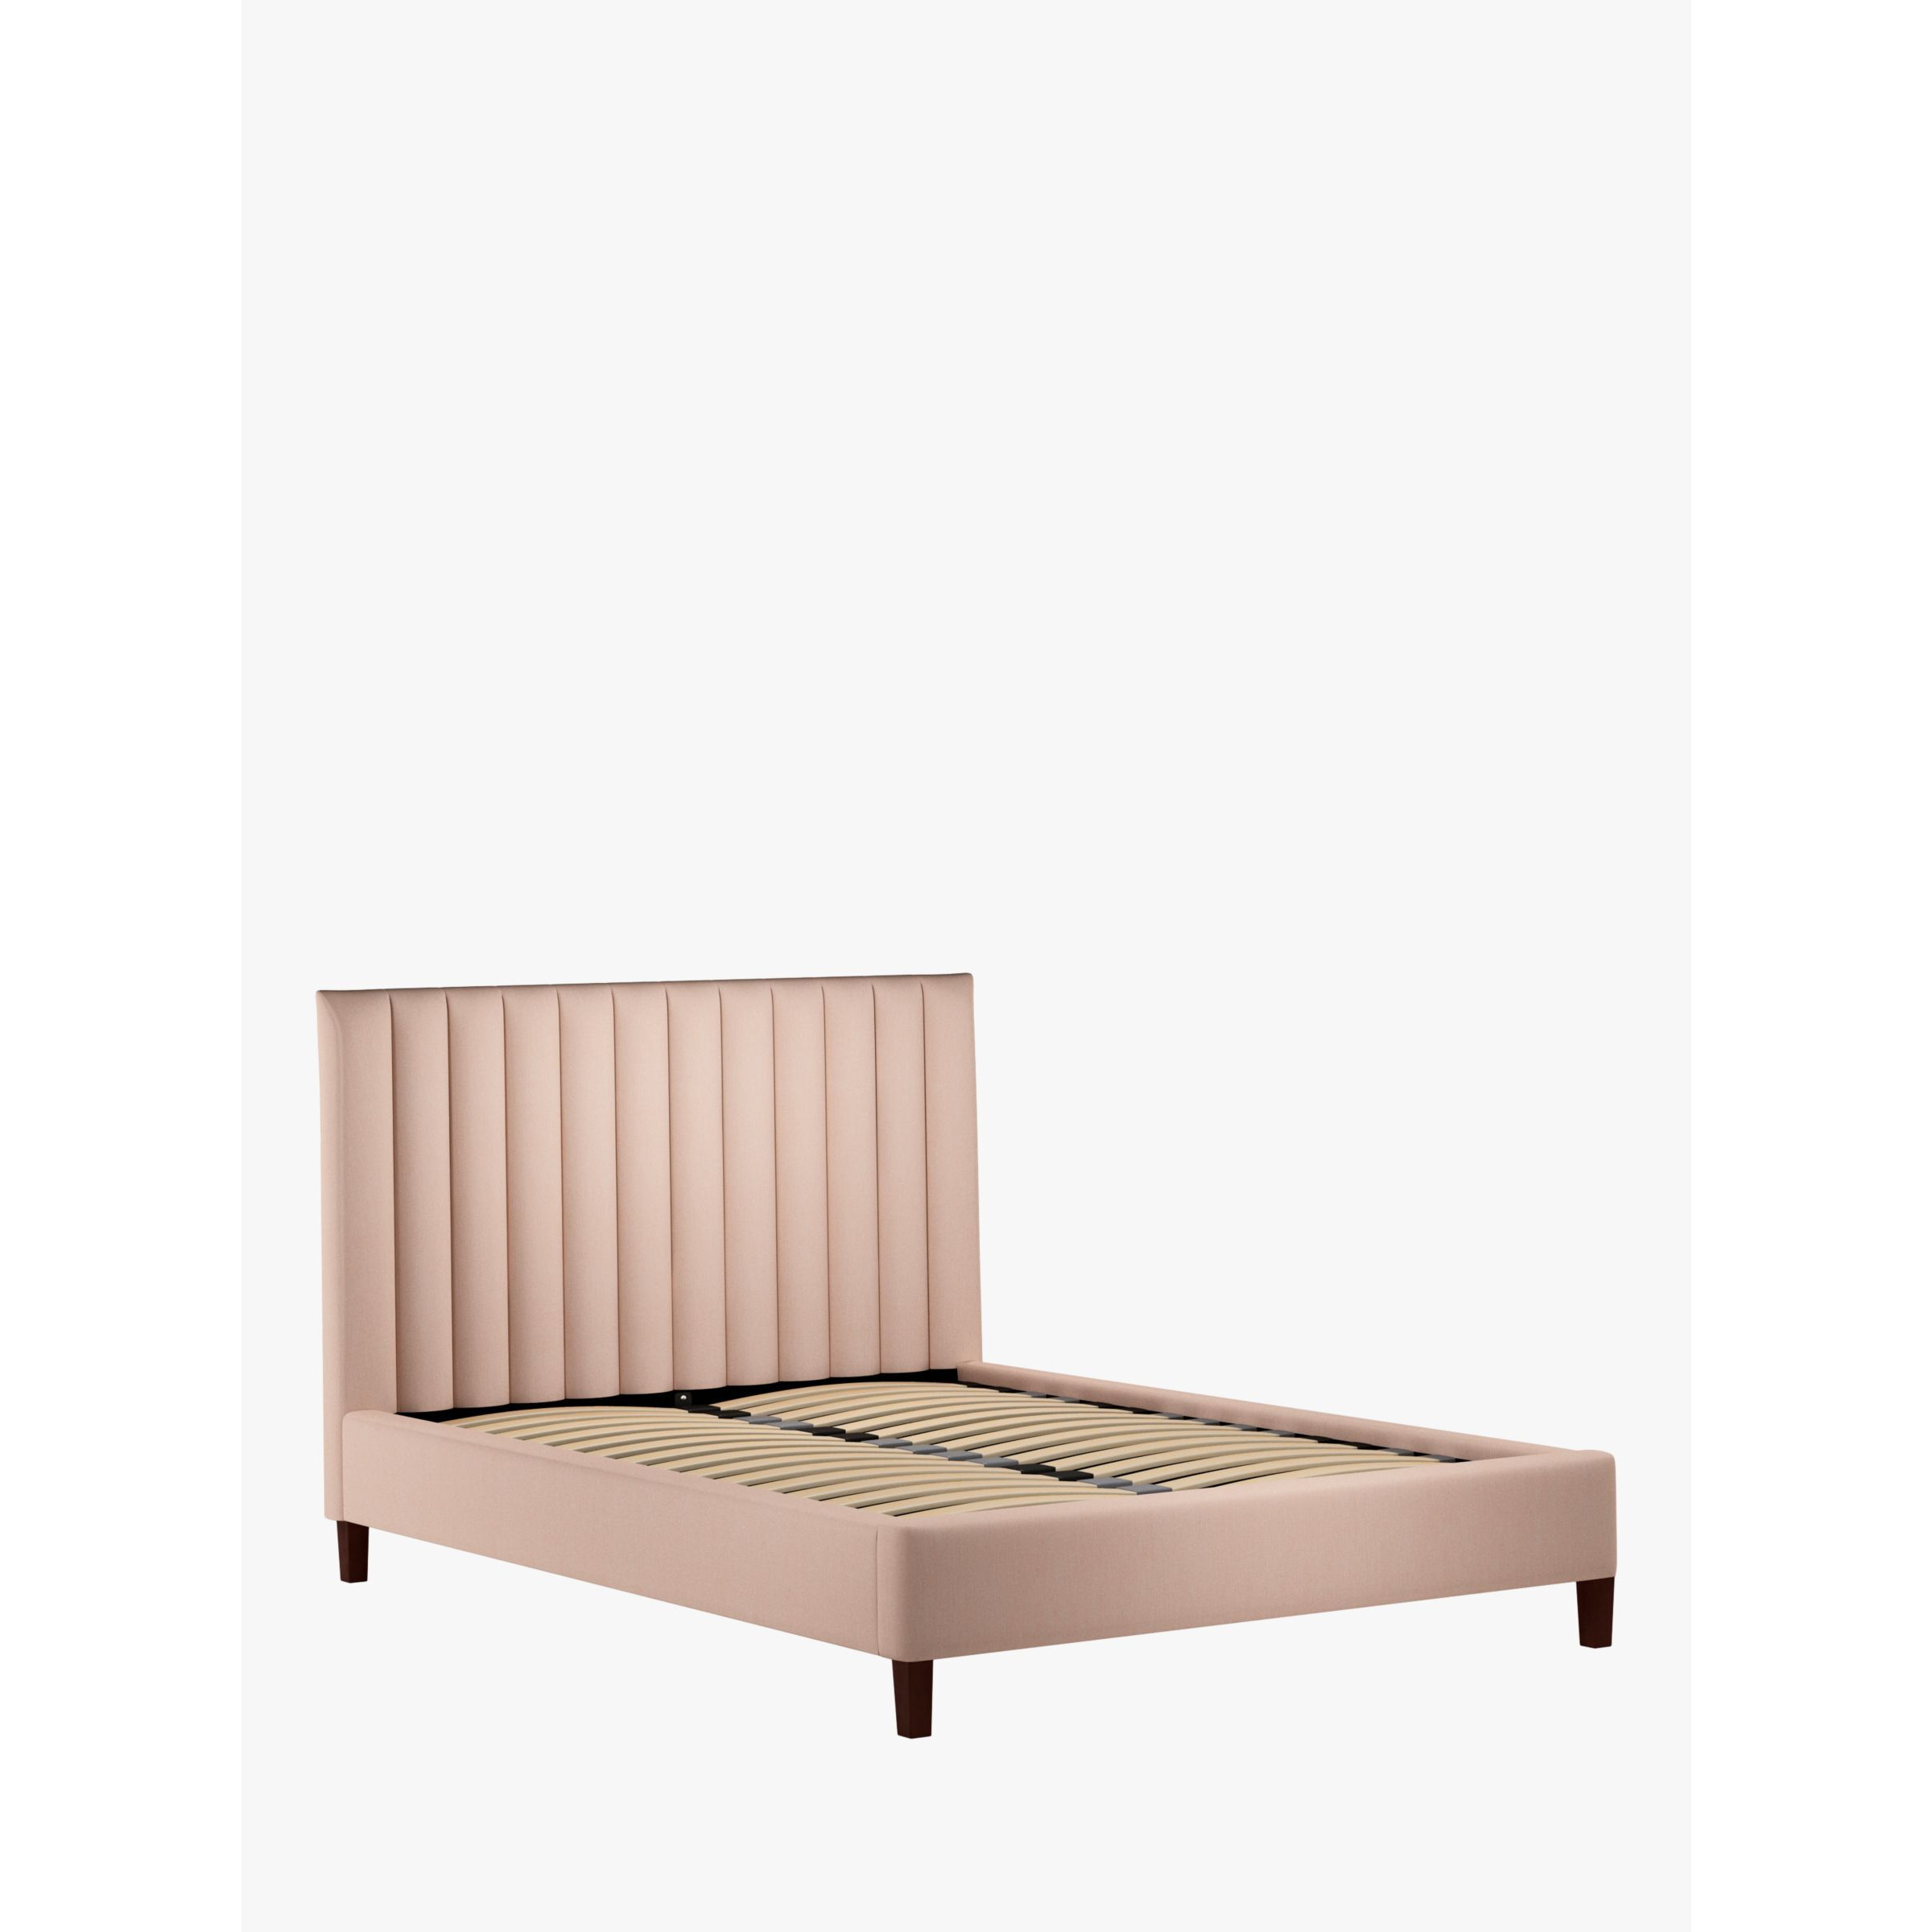 John Lewis Fluted Upholstered Bed Frame, Double - image 1